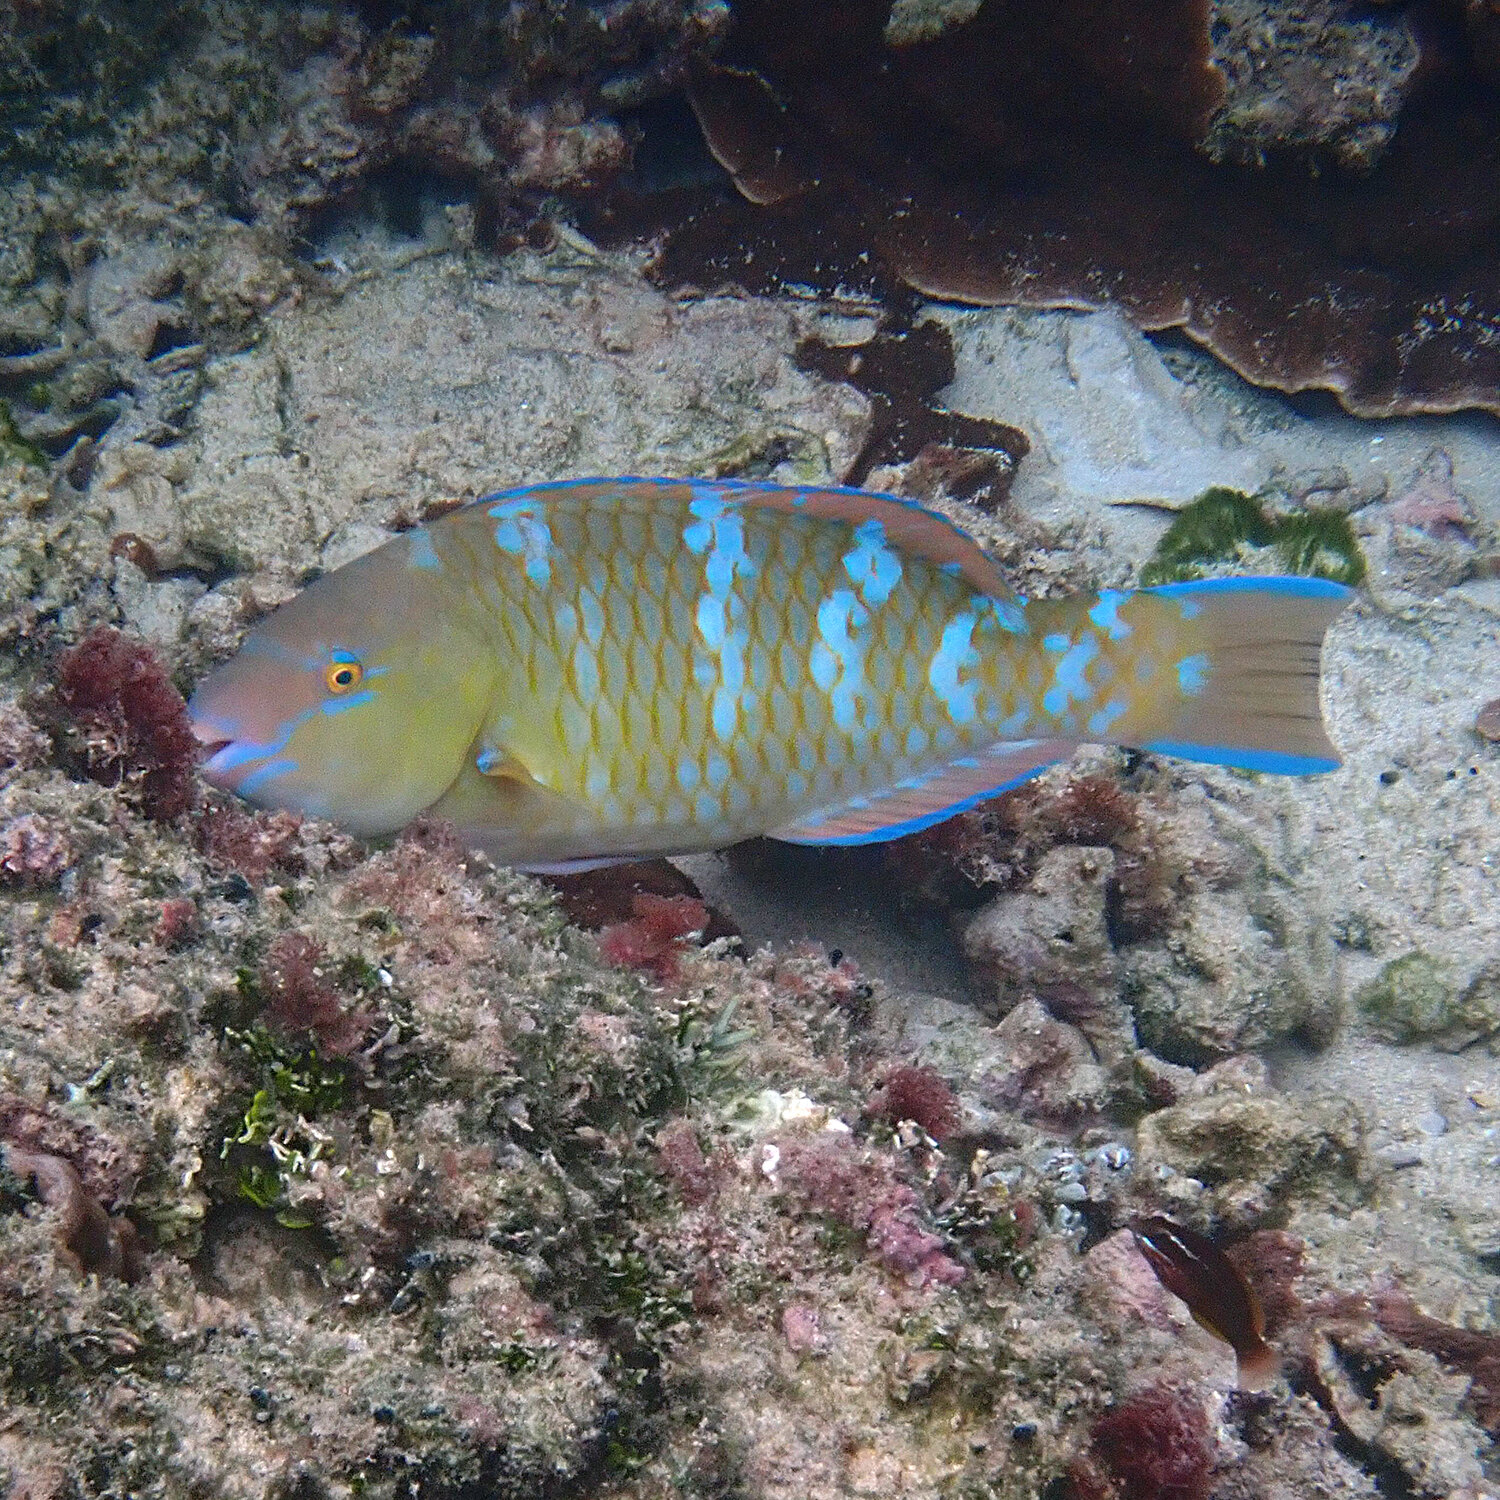 Bluebarred parrotfish - Scarus ghobban